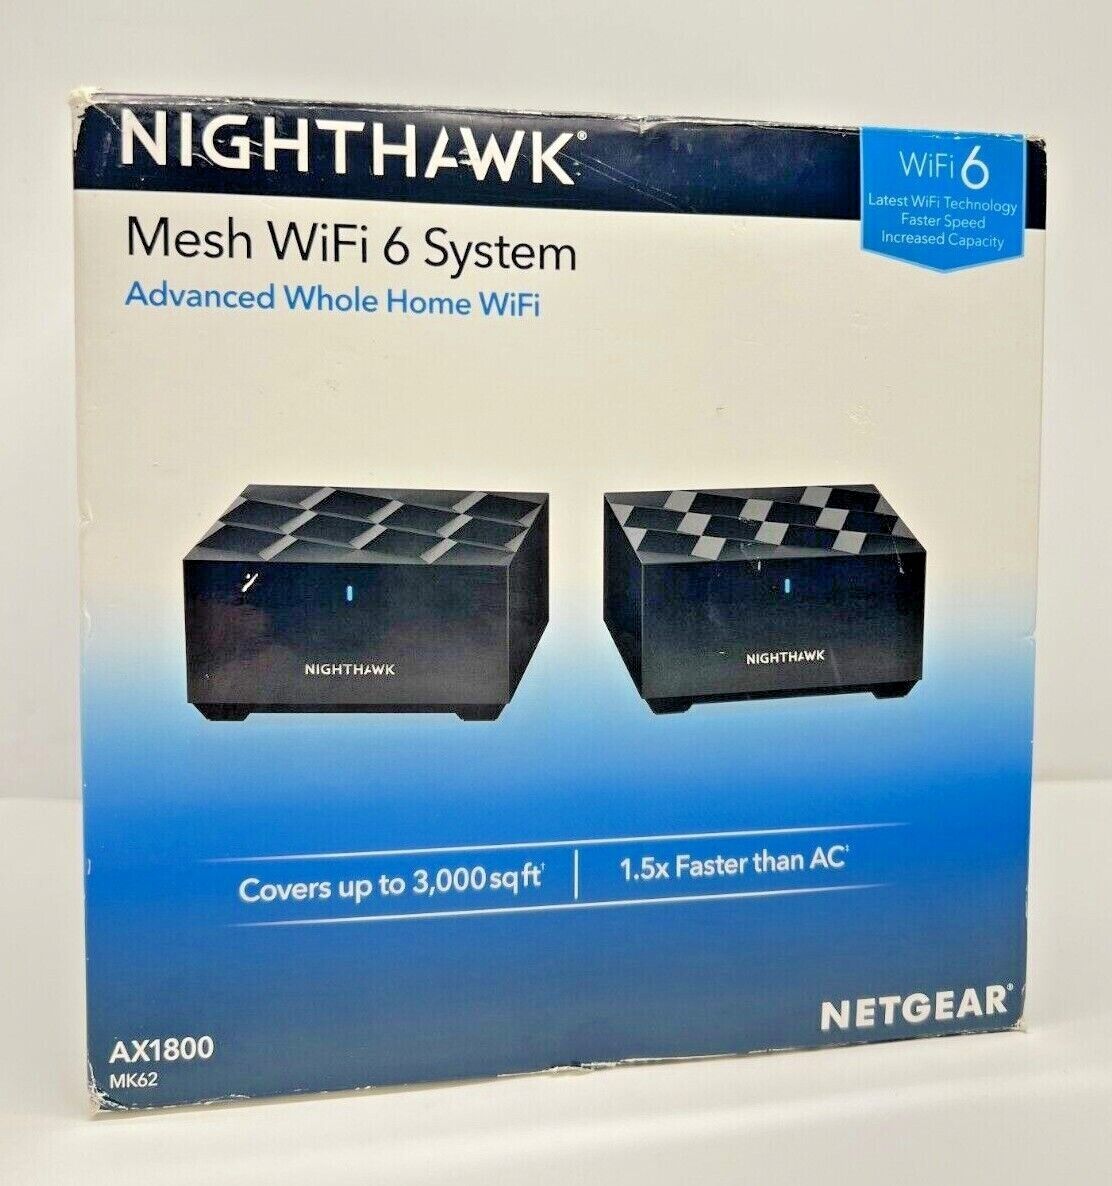 NETGEAR Nighthawk Whole Home Mesh WiFi 6 System (MK62) - AX1800 router